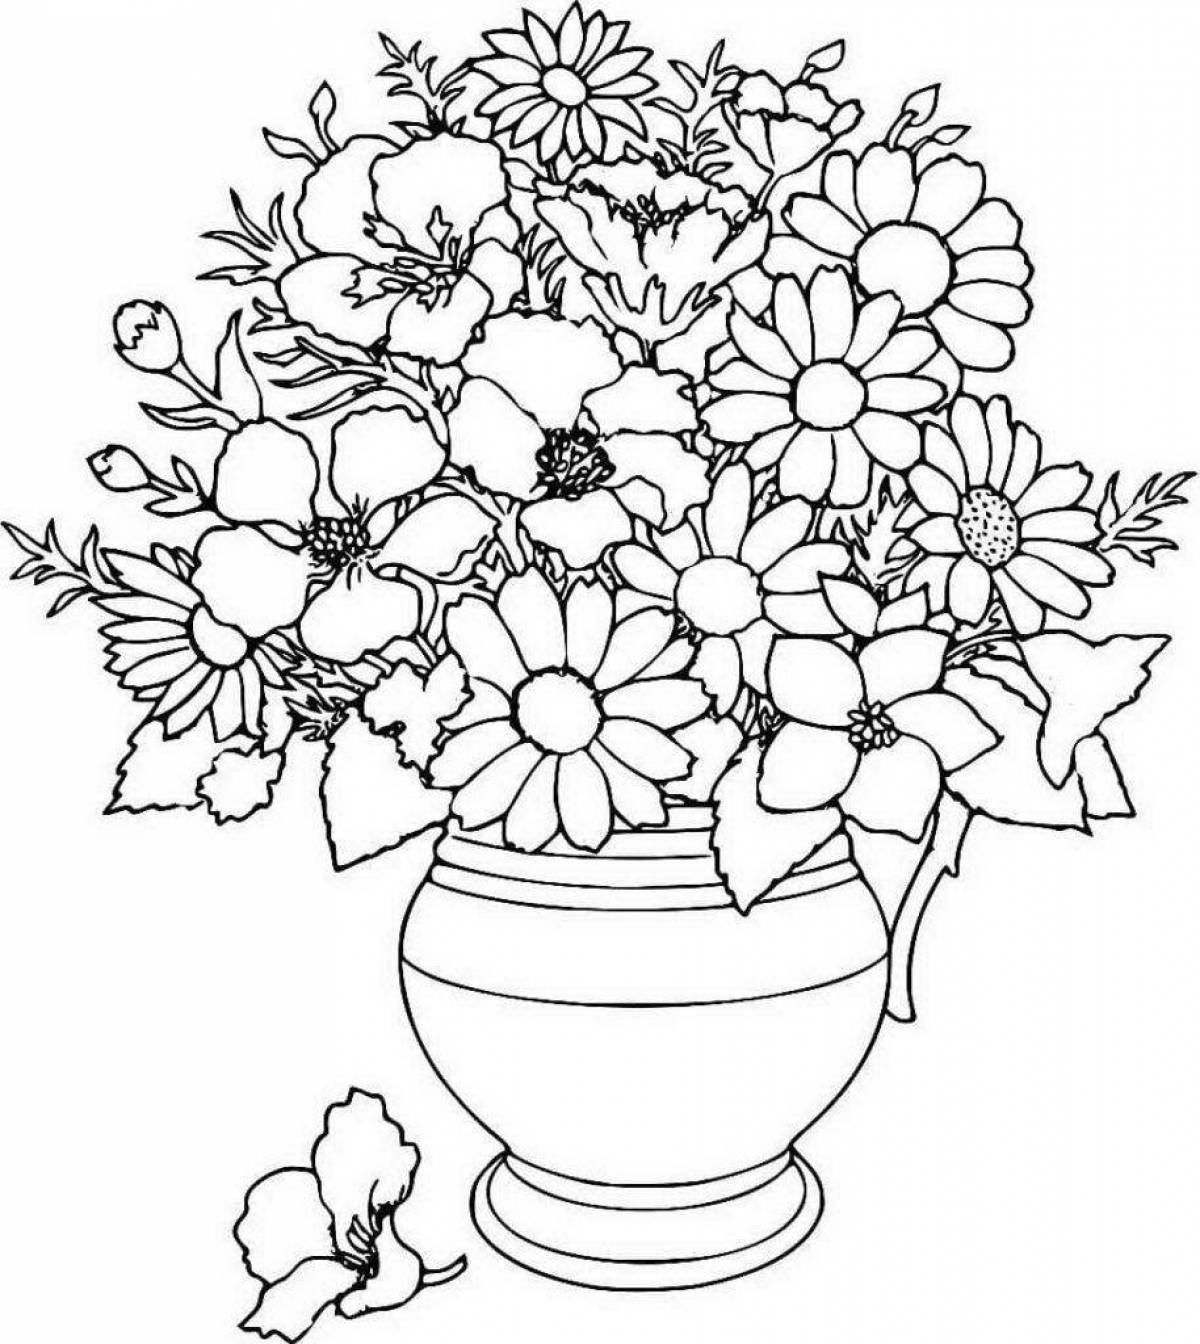 Luminous flower vase coloring book for kids